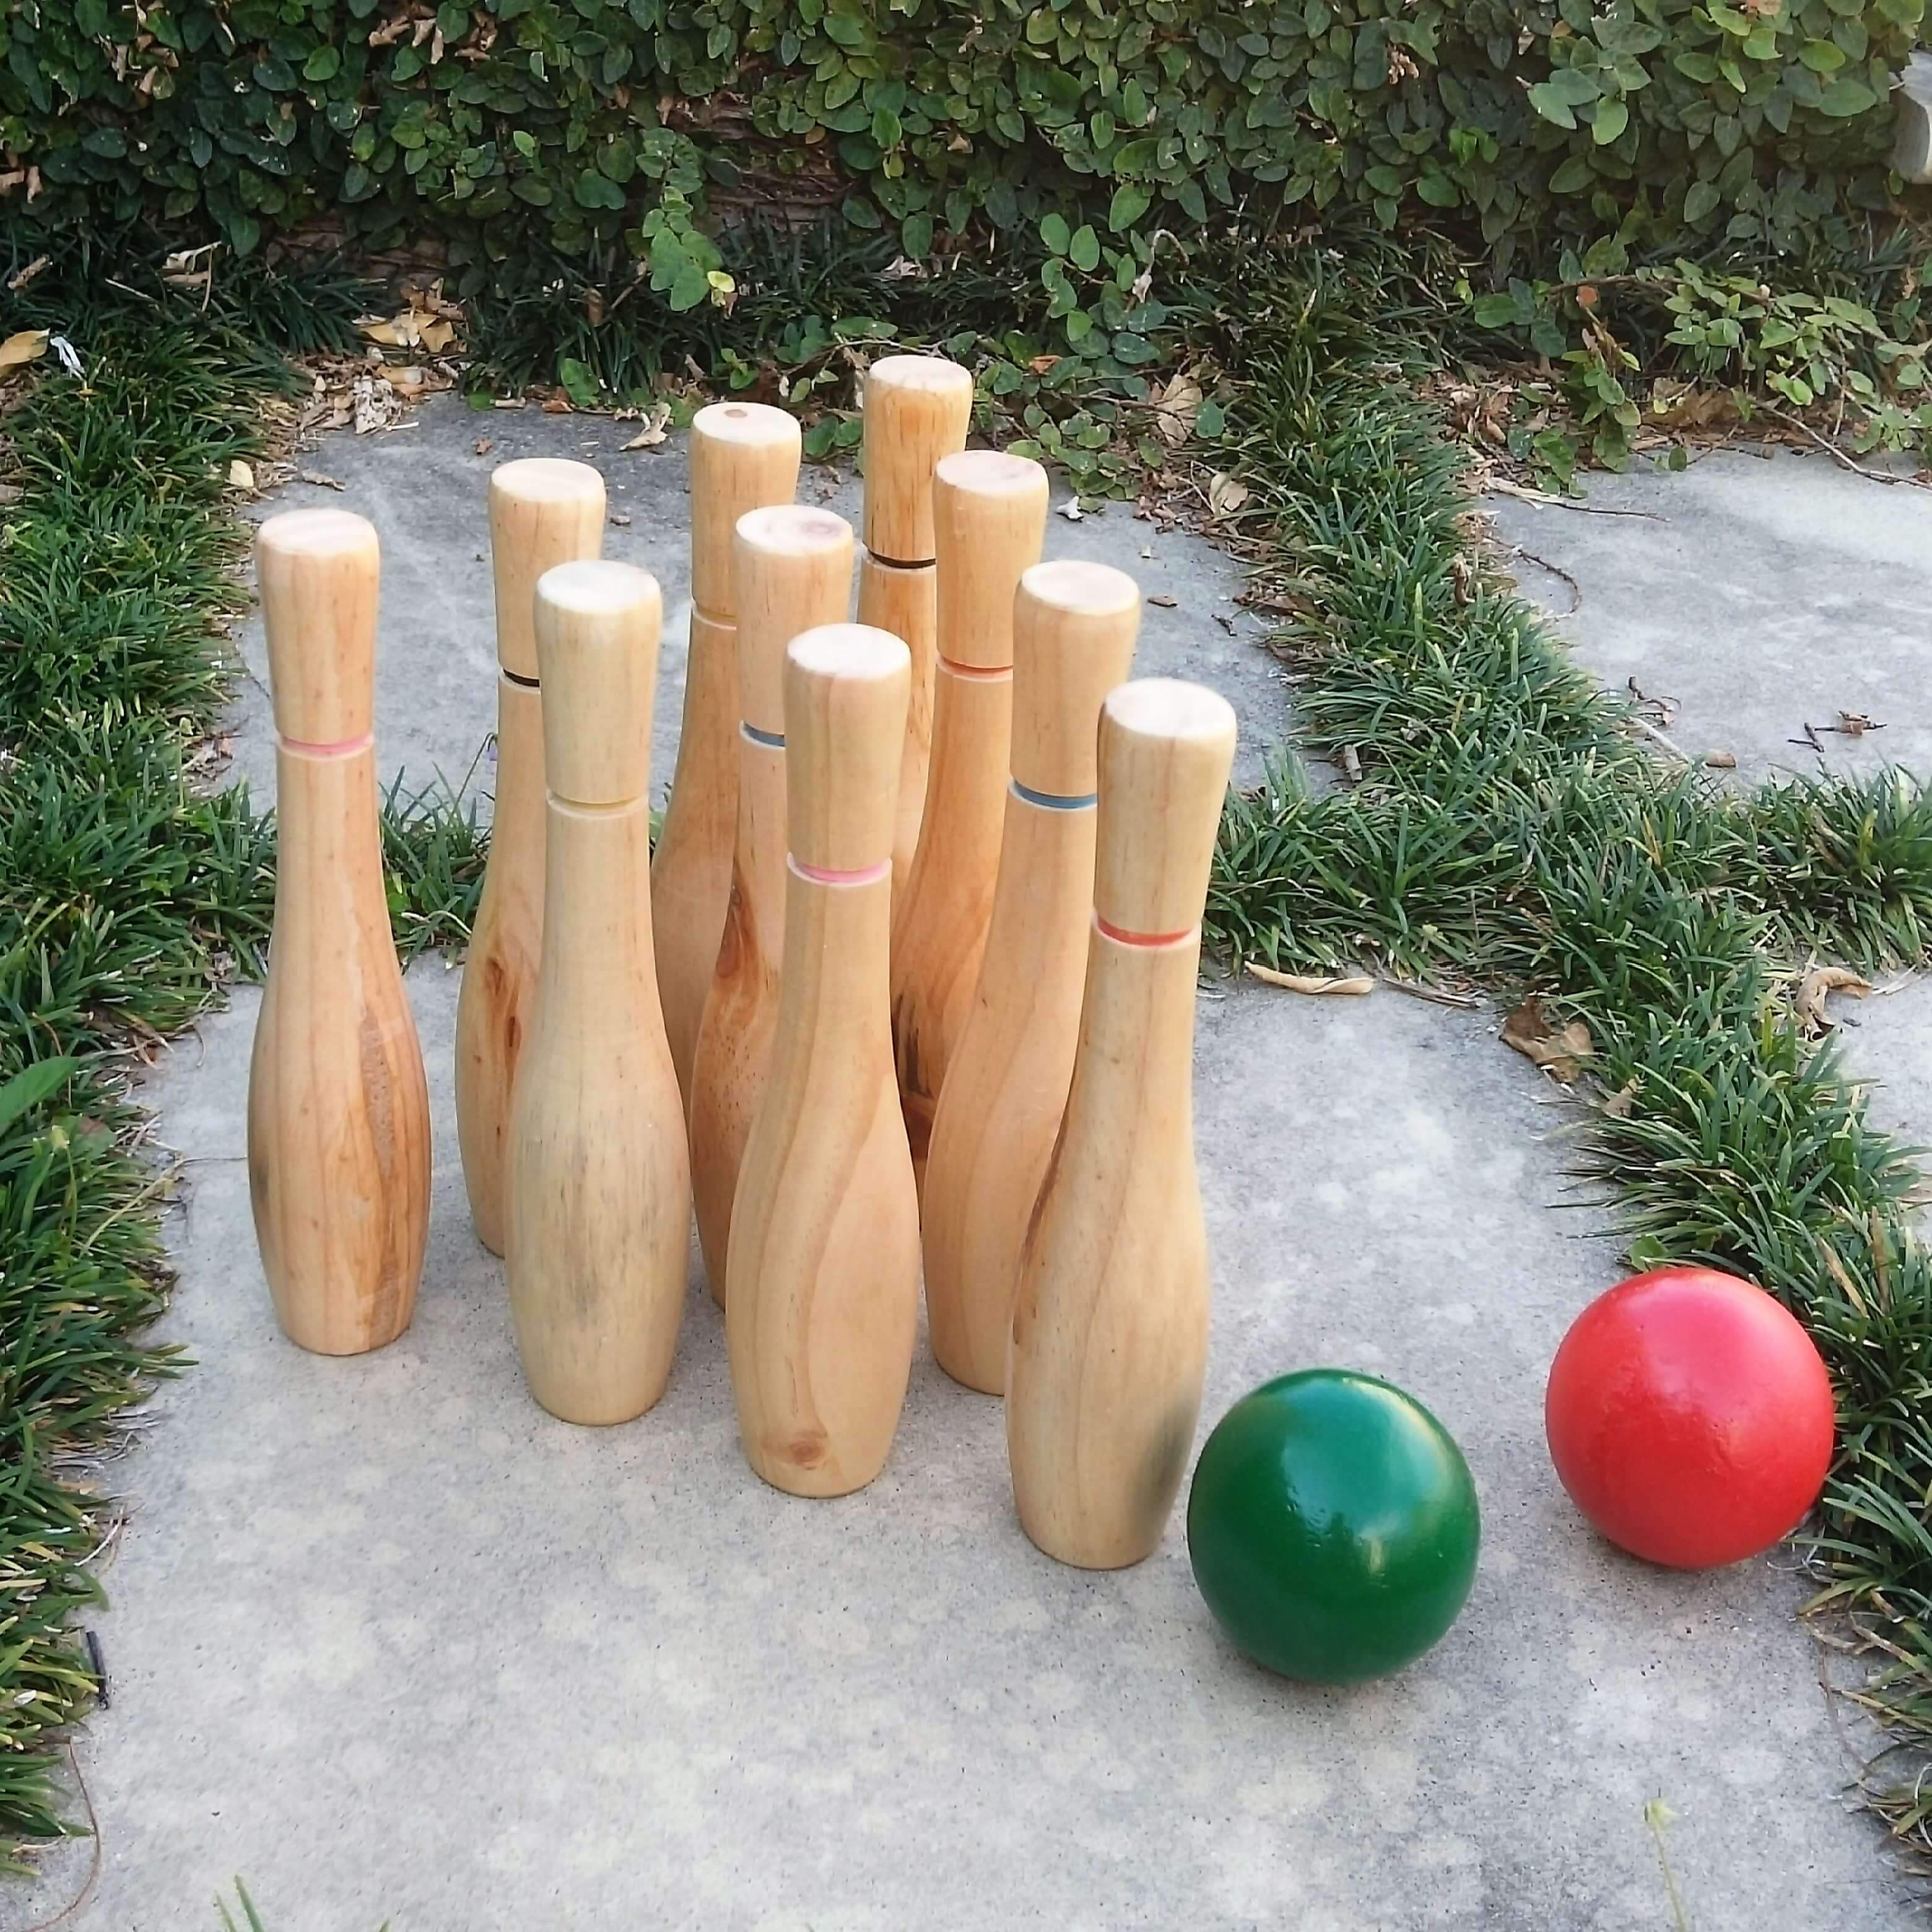 Wooden Bowling Pins and Balls